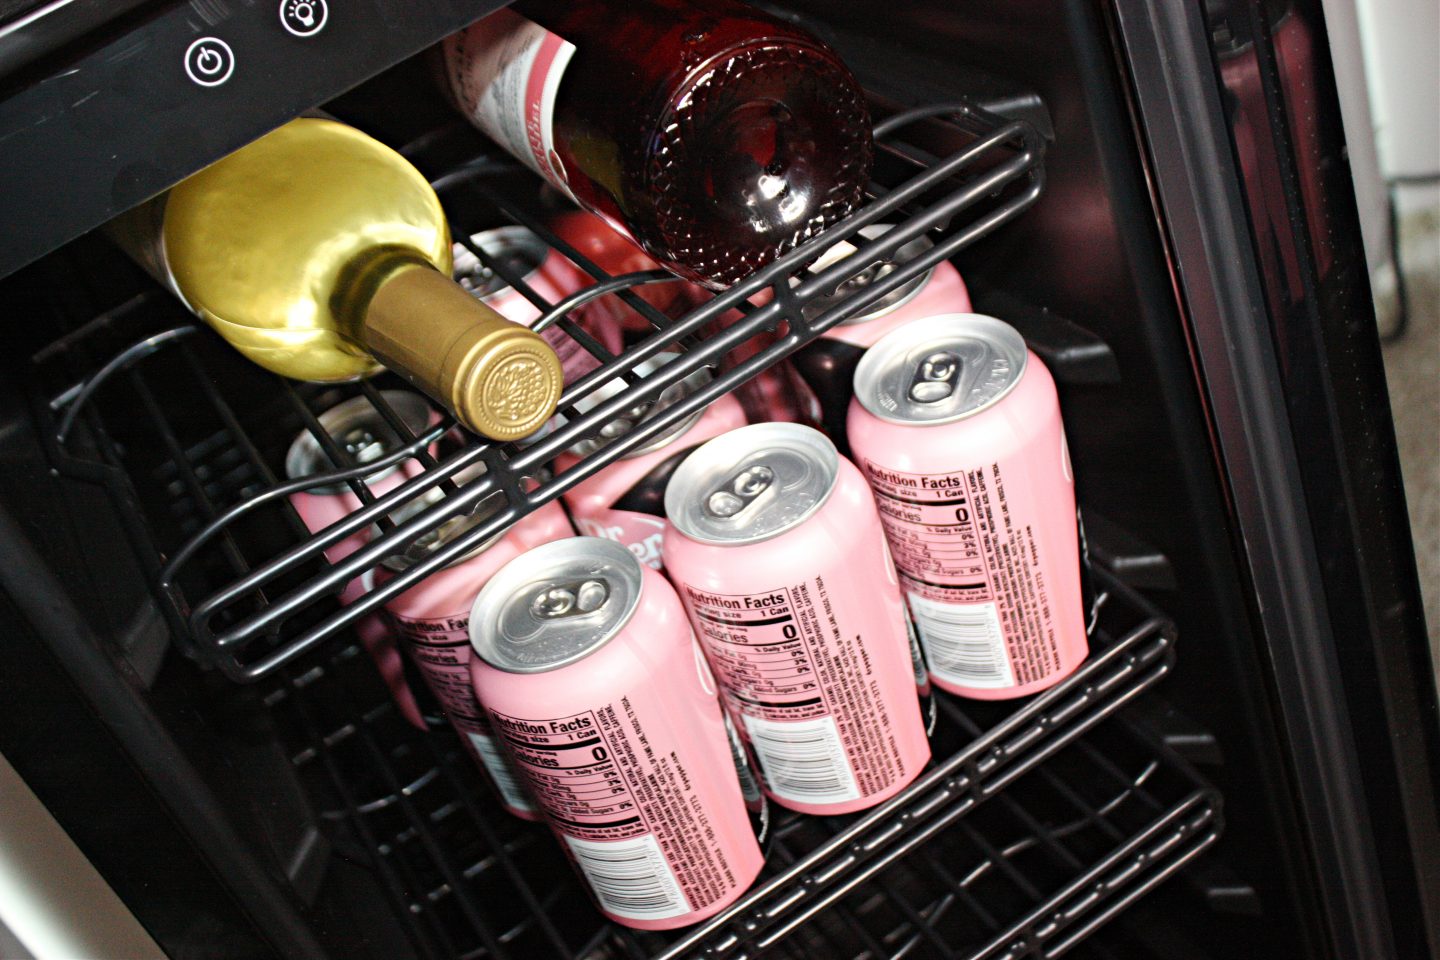 The Newair 15" FlipShelf™ Wine and Beverage Refrigerator